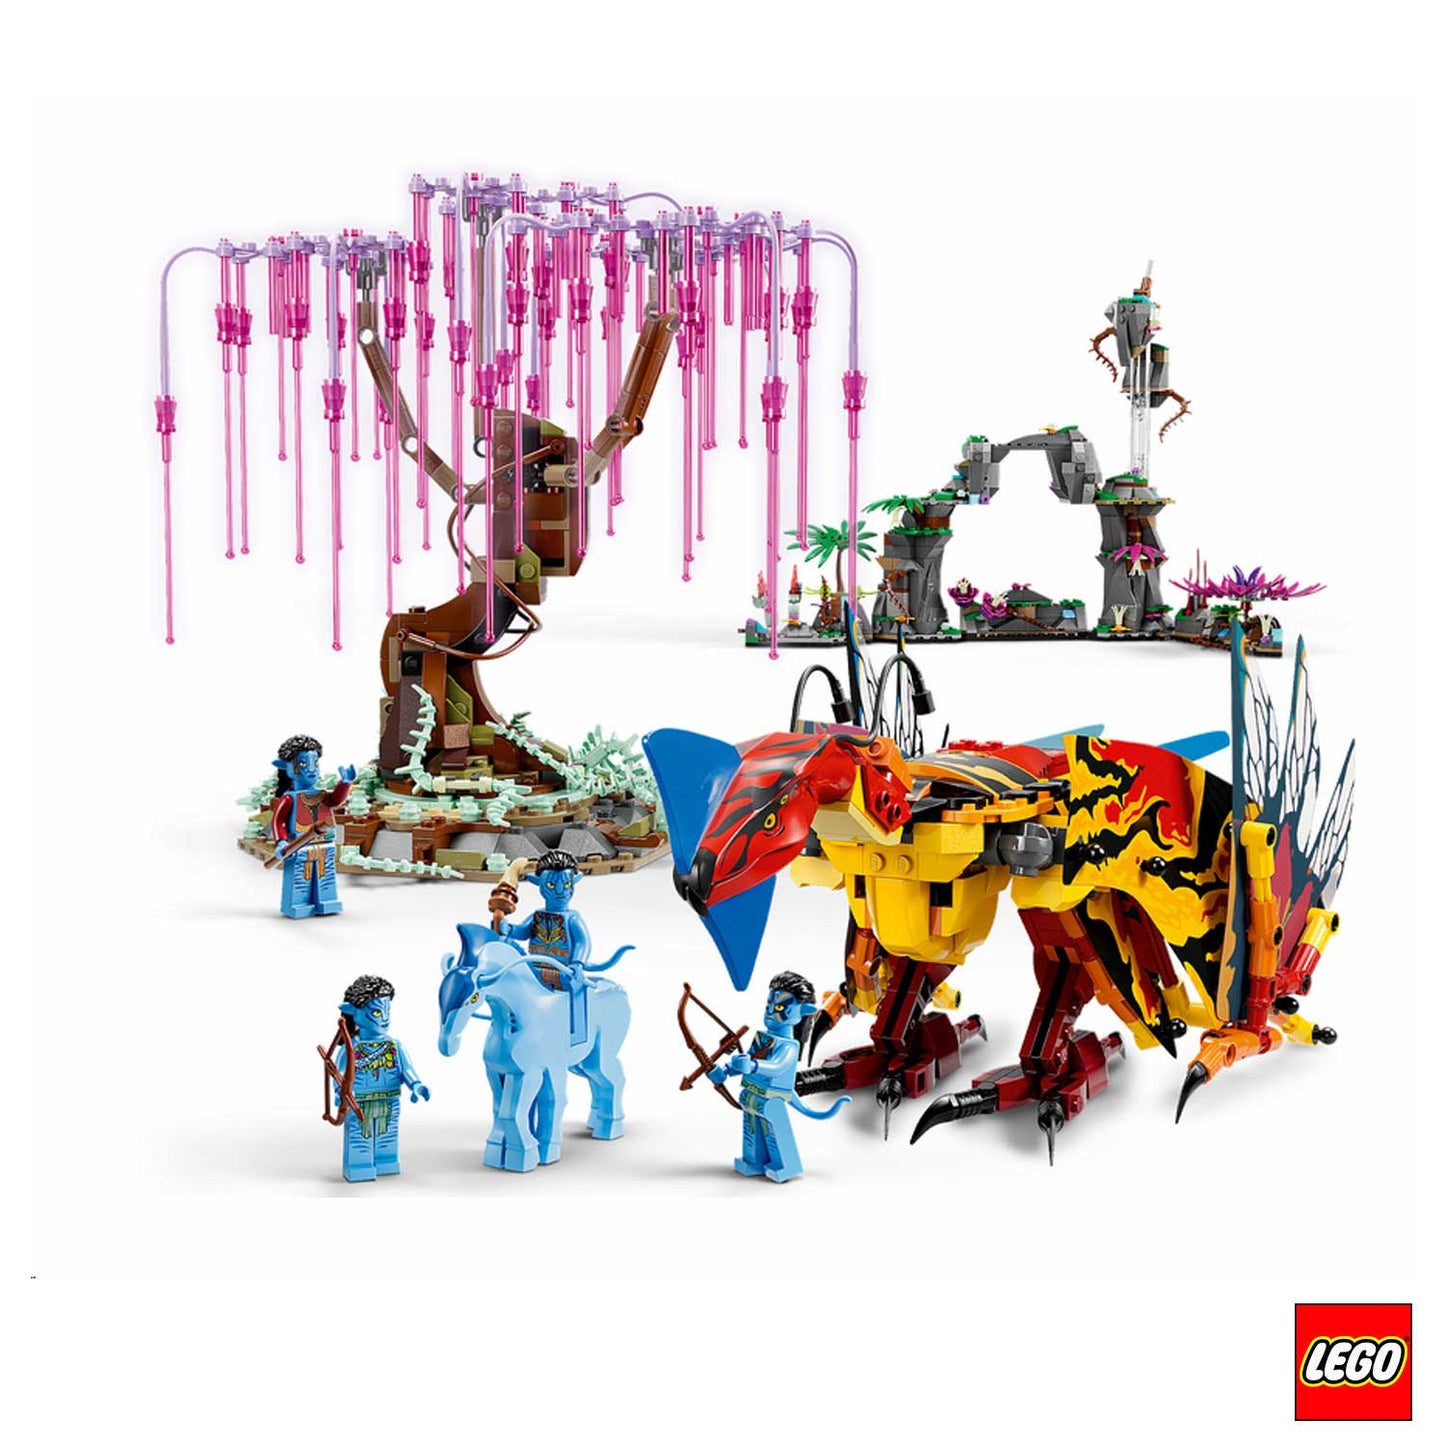 Lego - Avatar Toruk Makto e l'Albero delle anime 75574